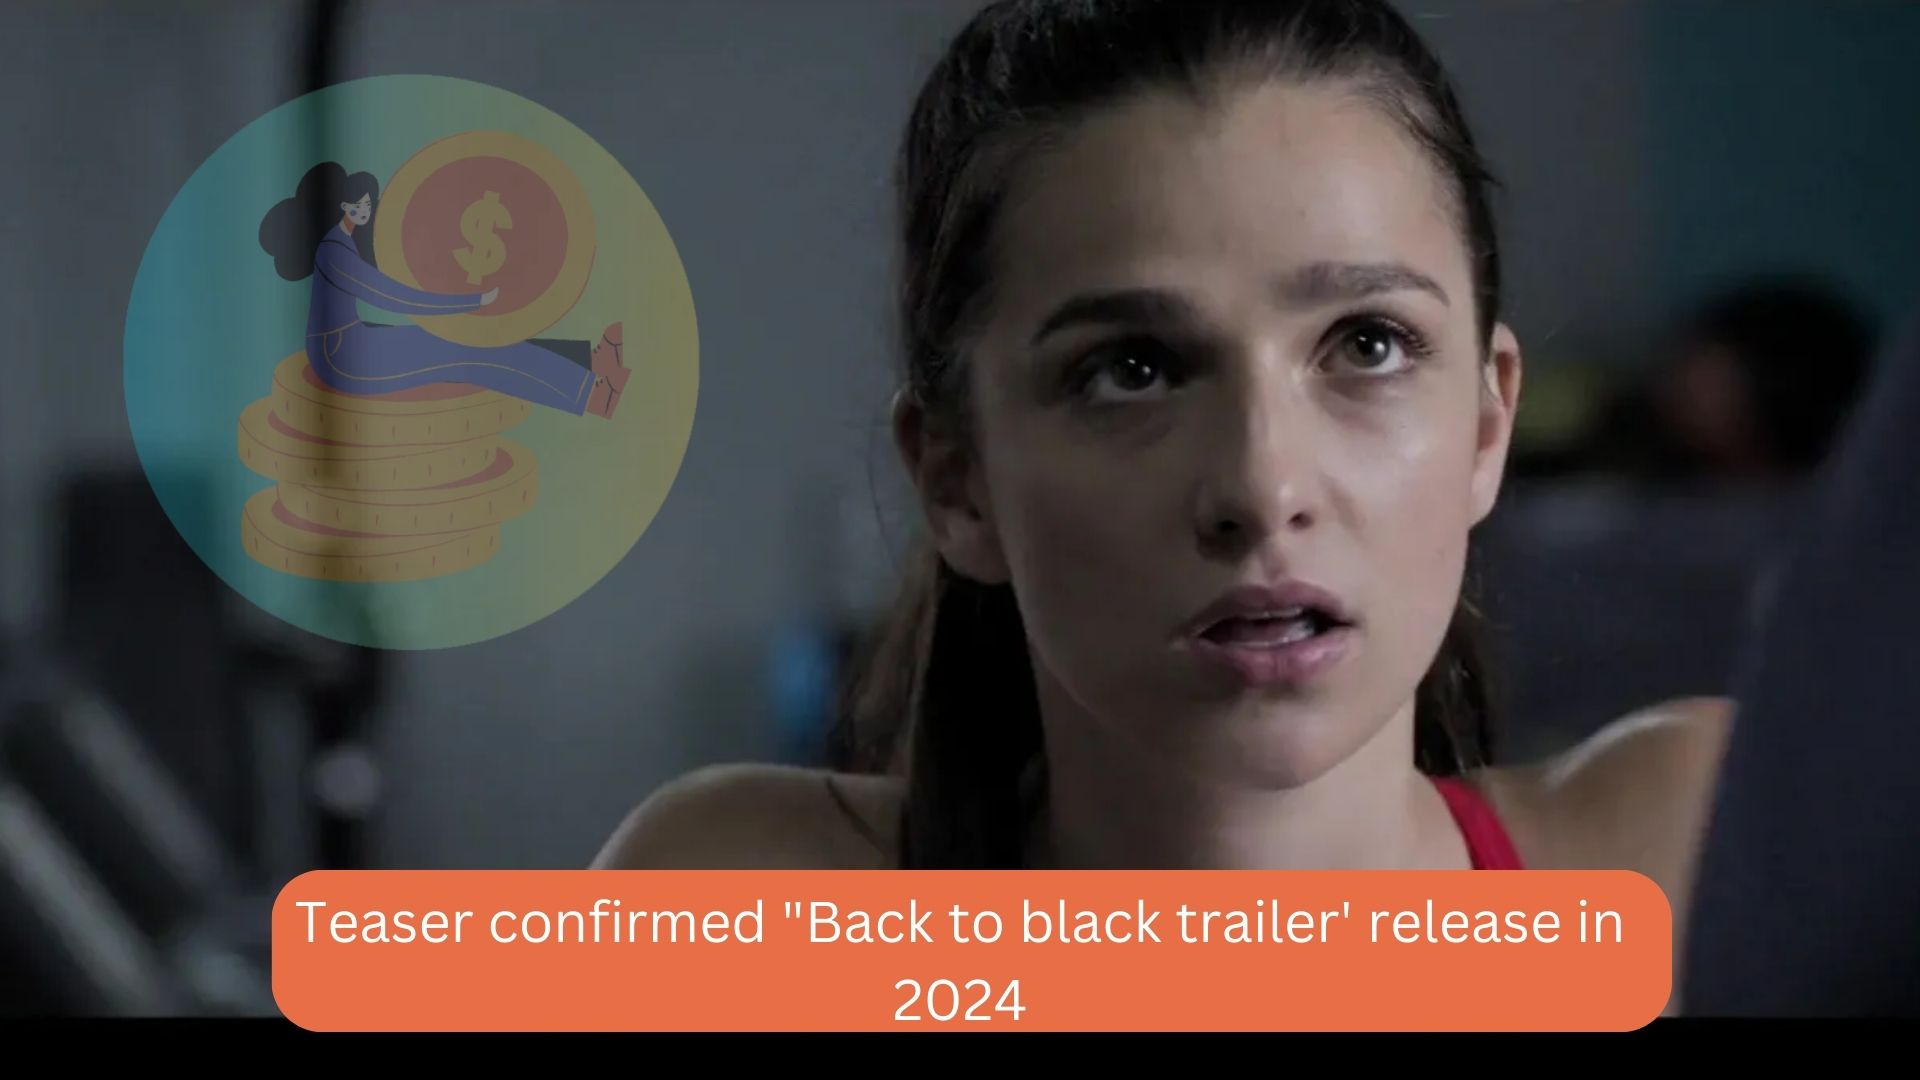 back to black trailer release confirmed